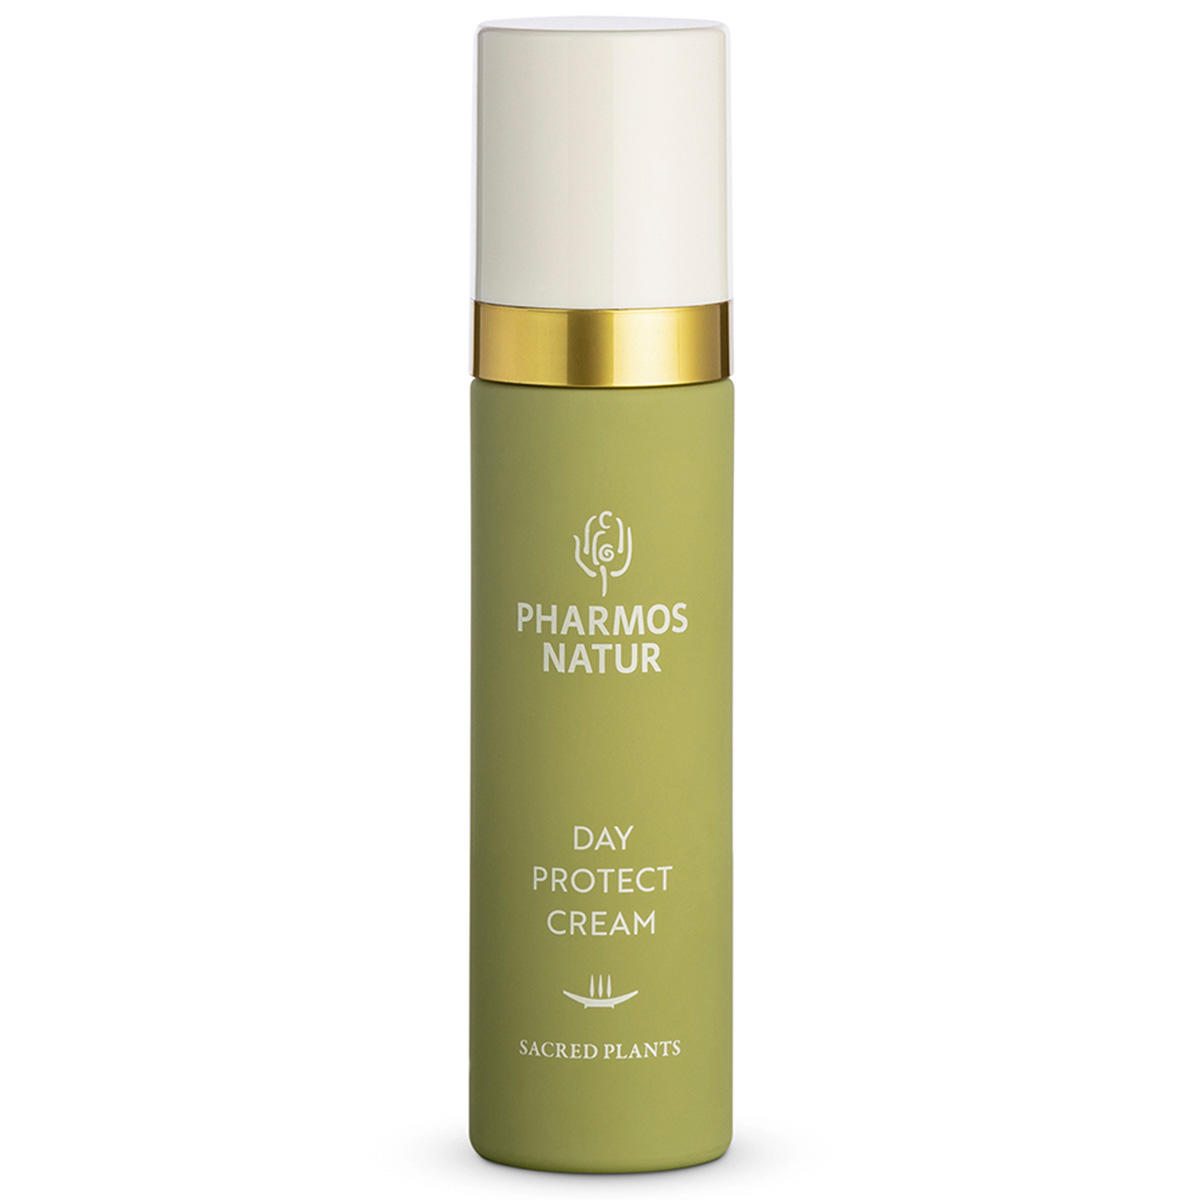 PHARMOS NATUR Skin Therapy Day Protect Cream 50 ml - 1